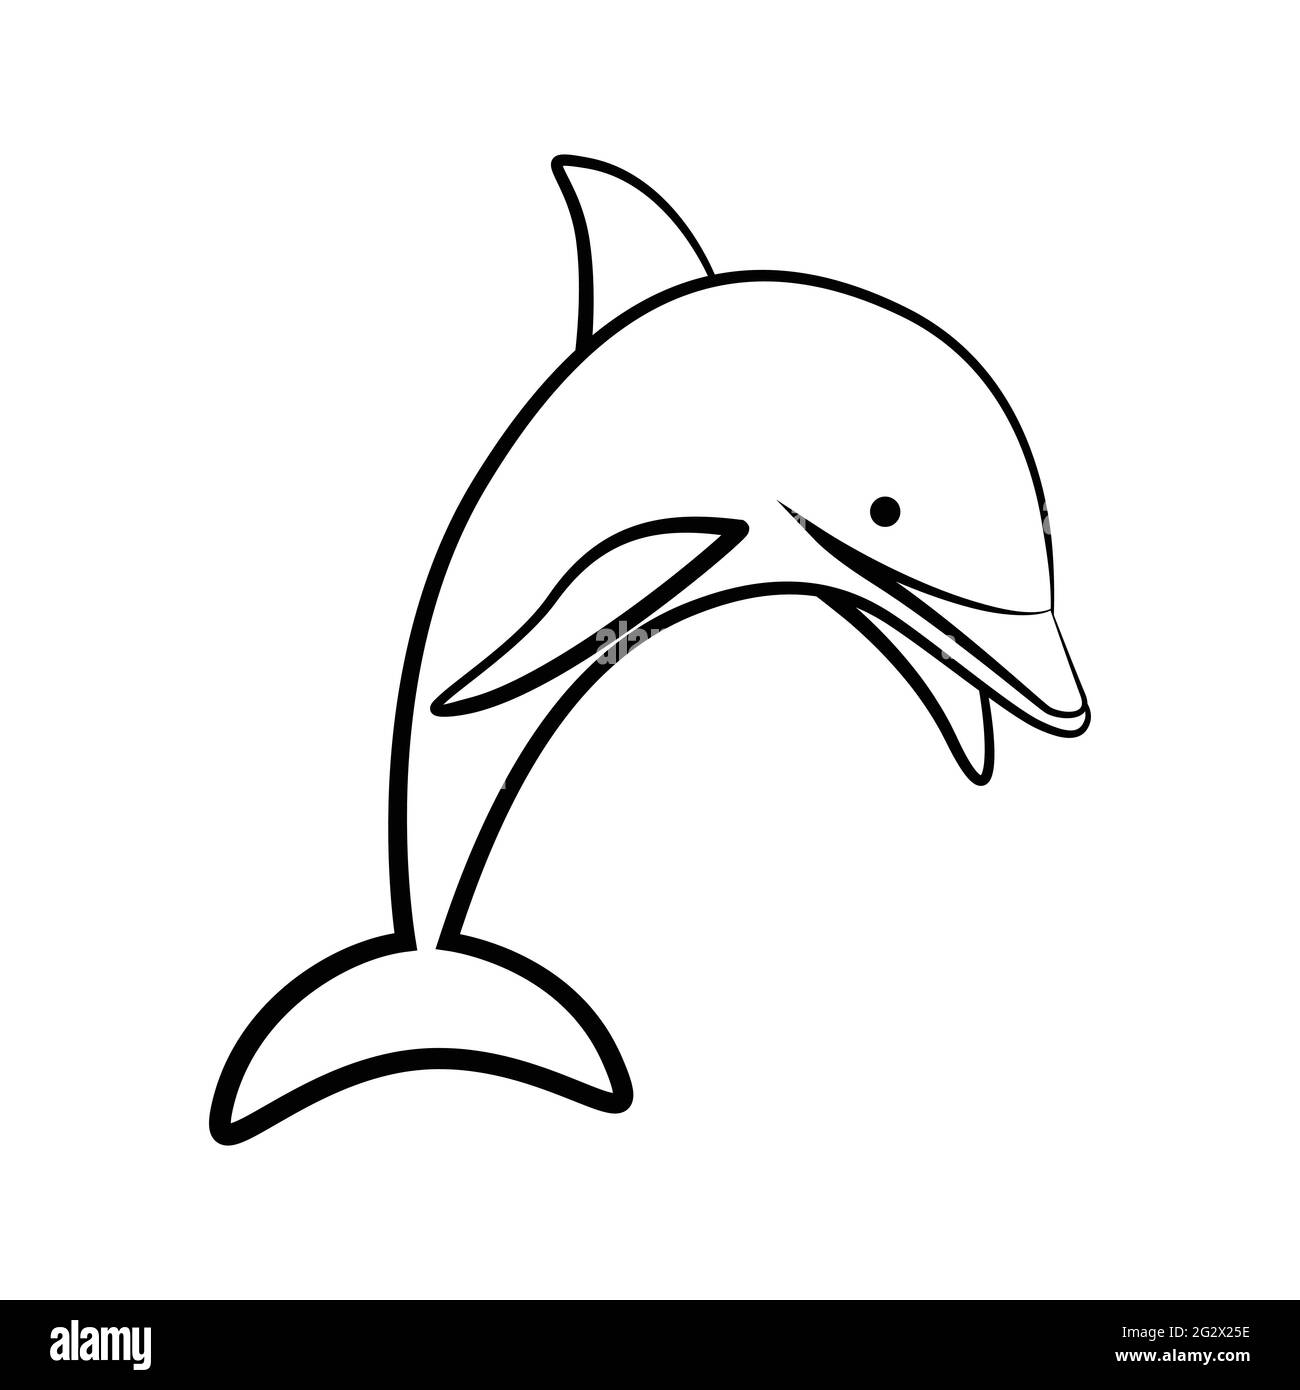 Linienkunst Vektor Illustration eines Delphins Stock Vektor